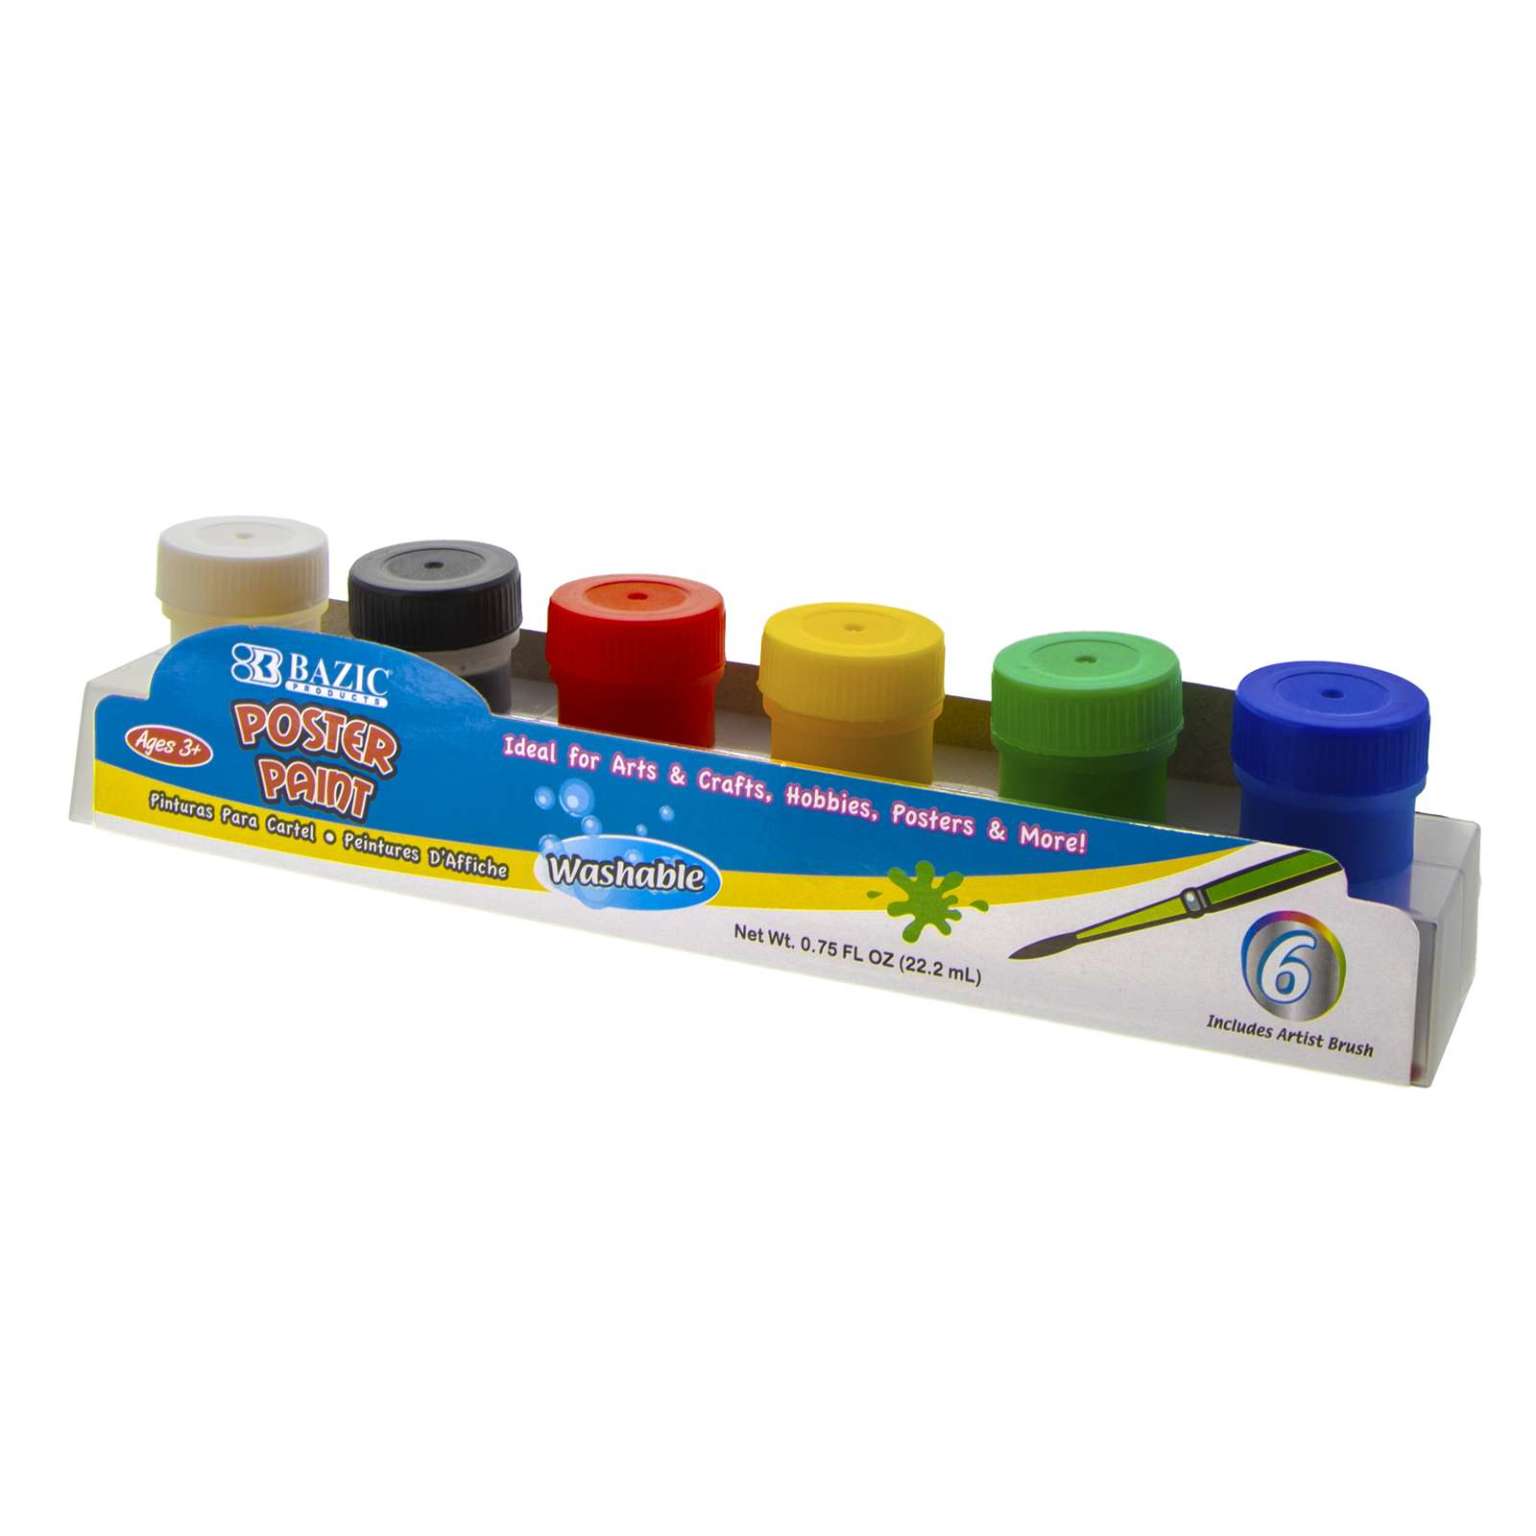 Wholesale Glitter Glue (6 Colors) 4 oz Bottles - DollarDays